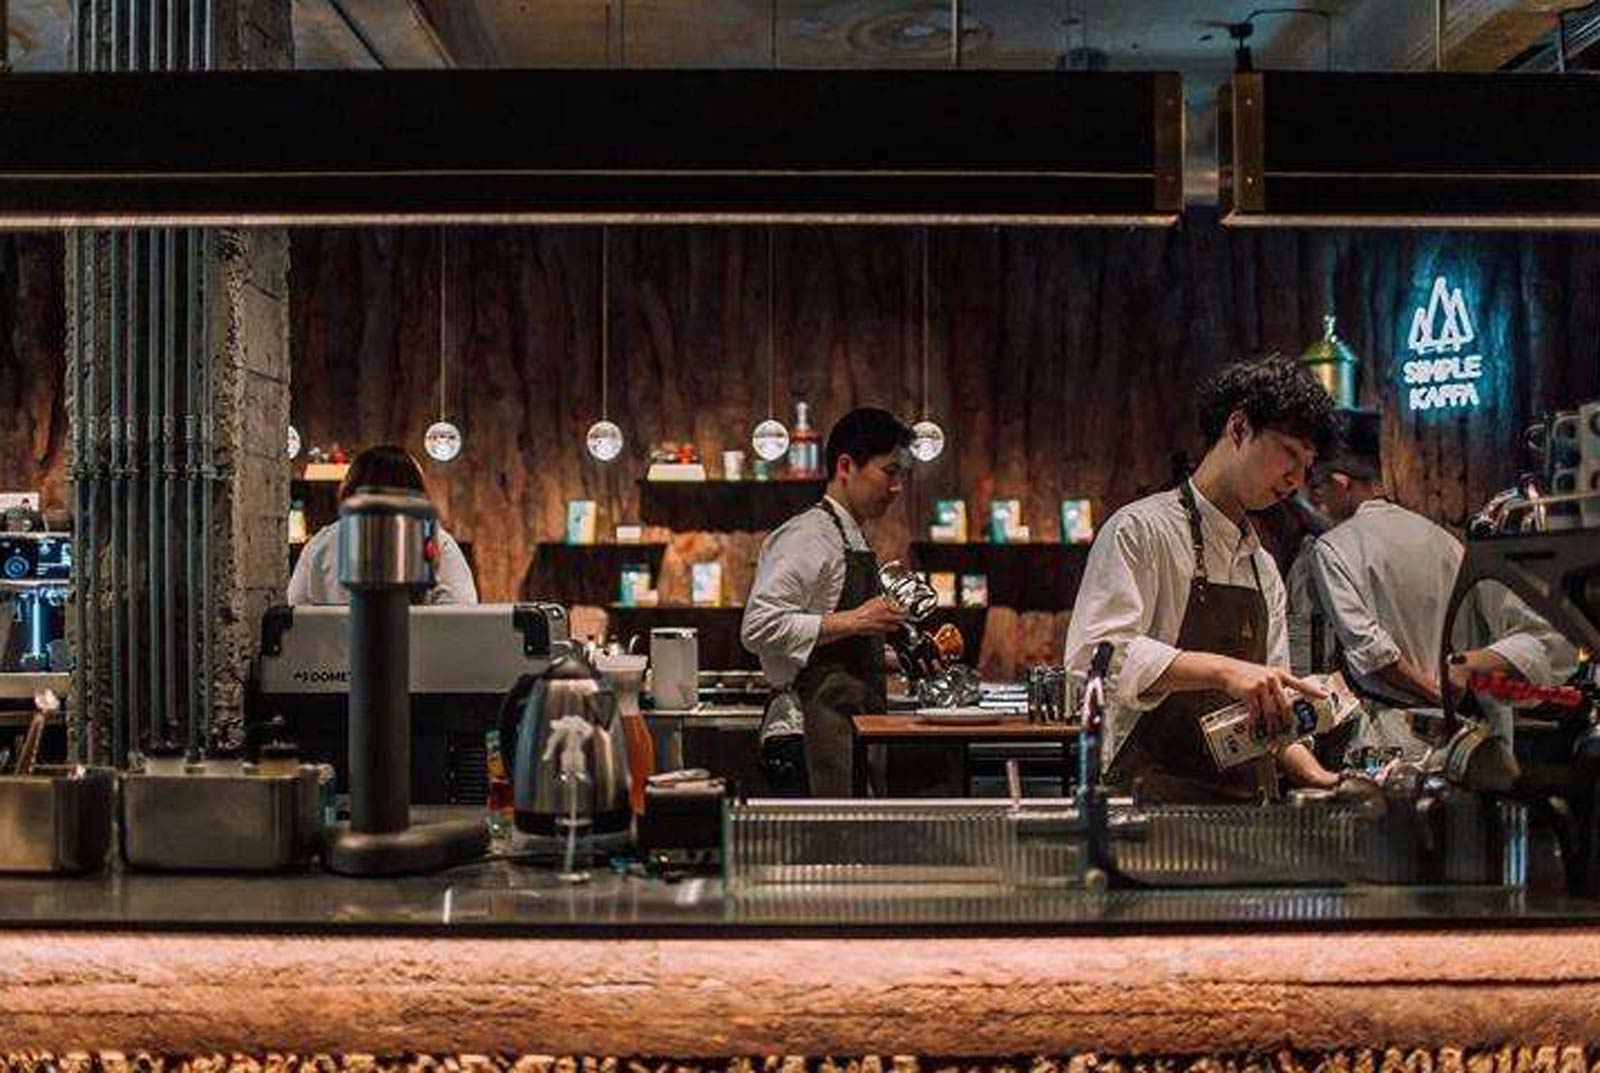 Taipei’s star coffee shops light up the international stage